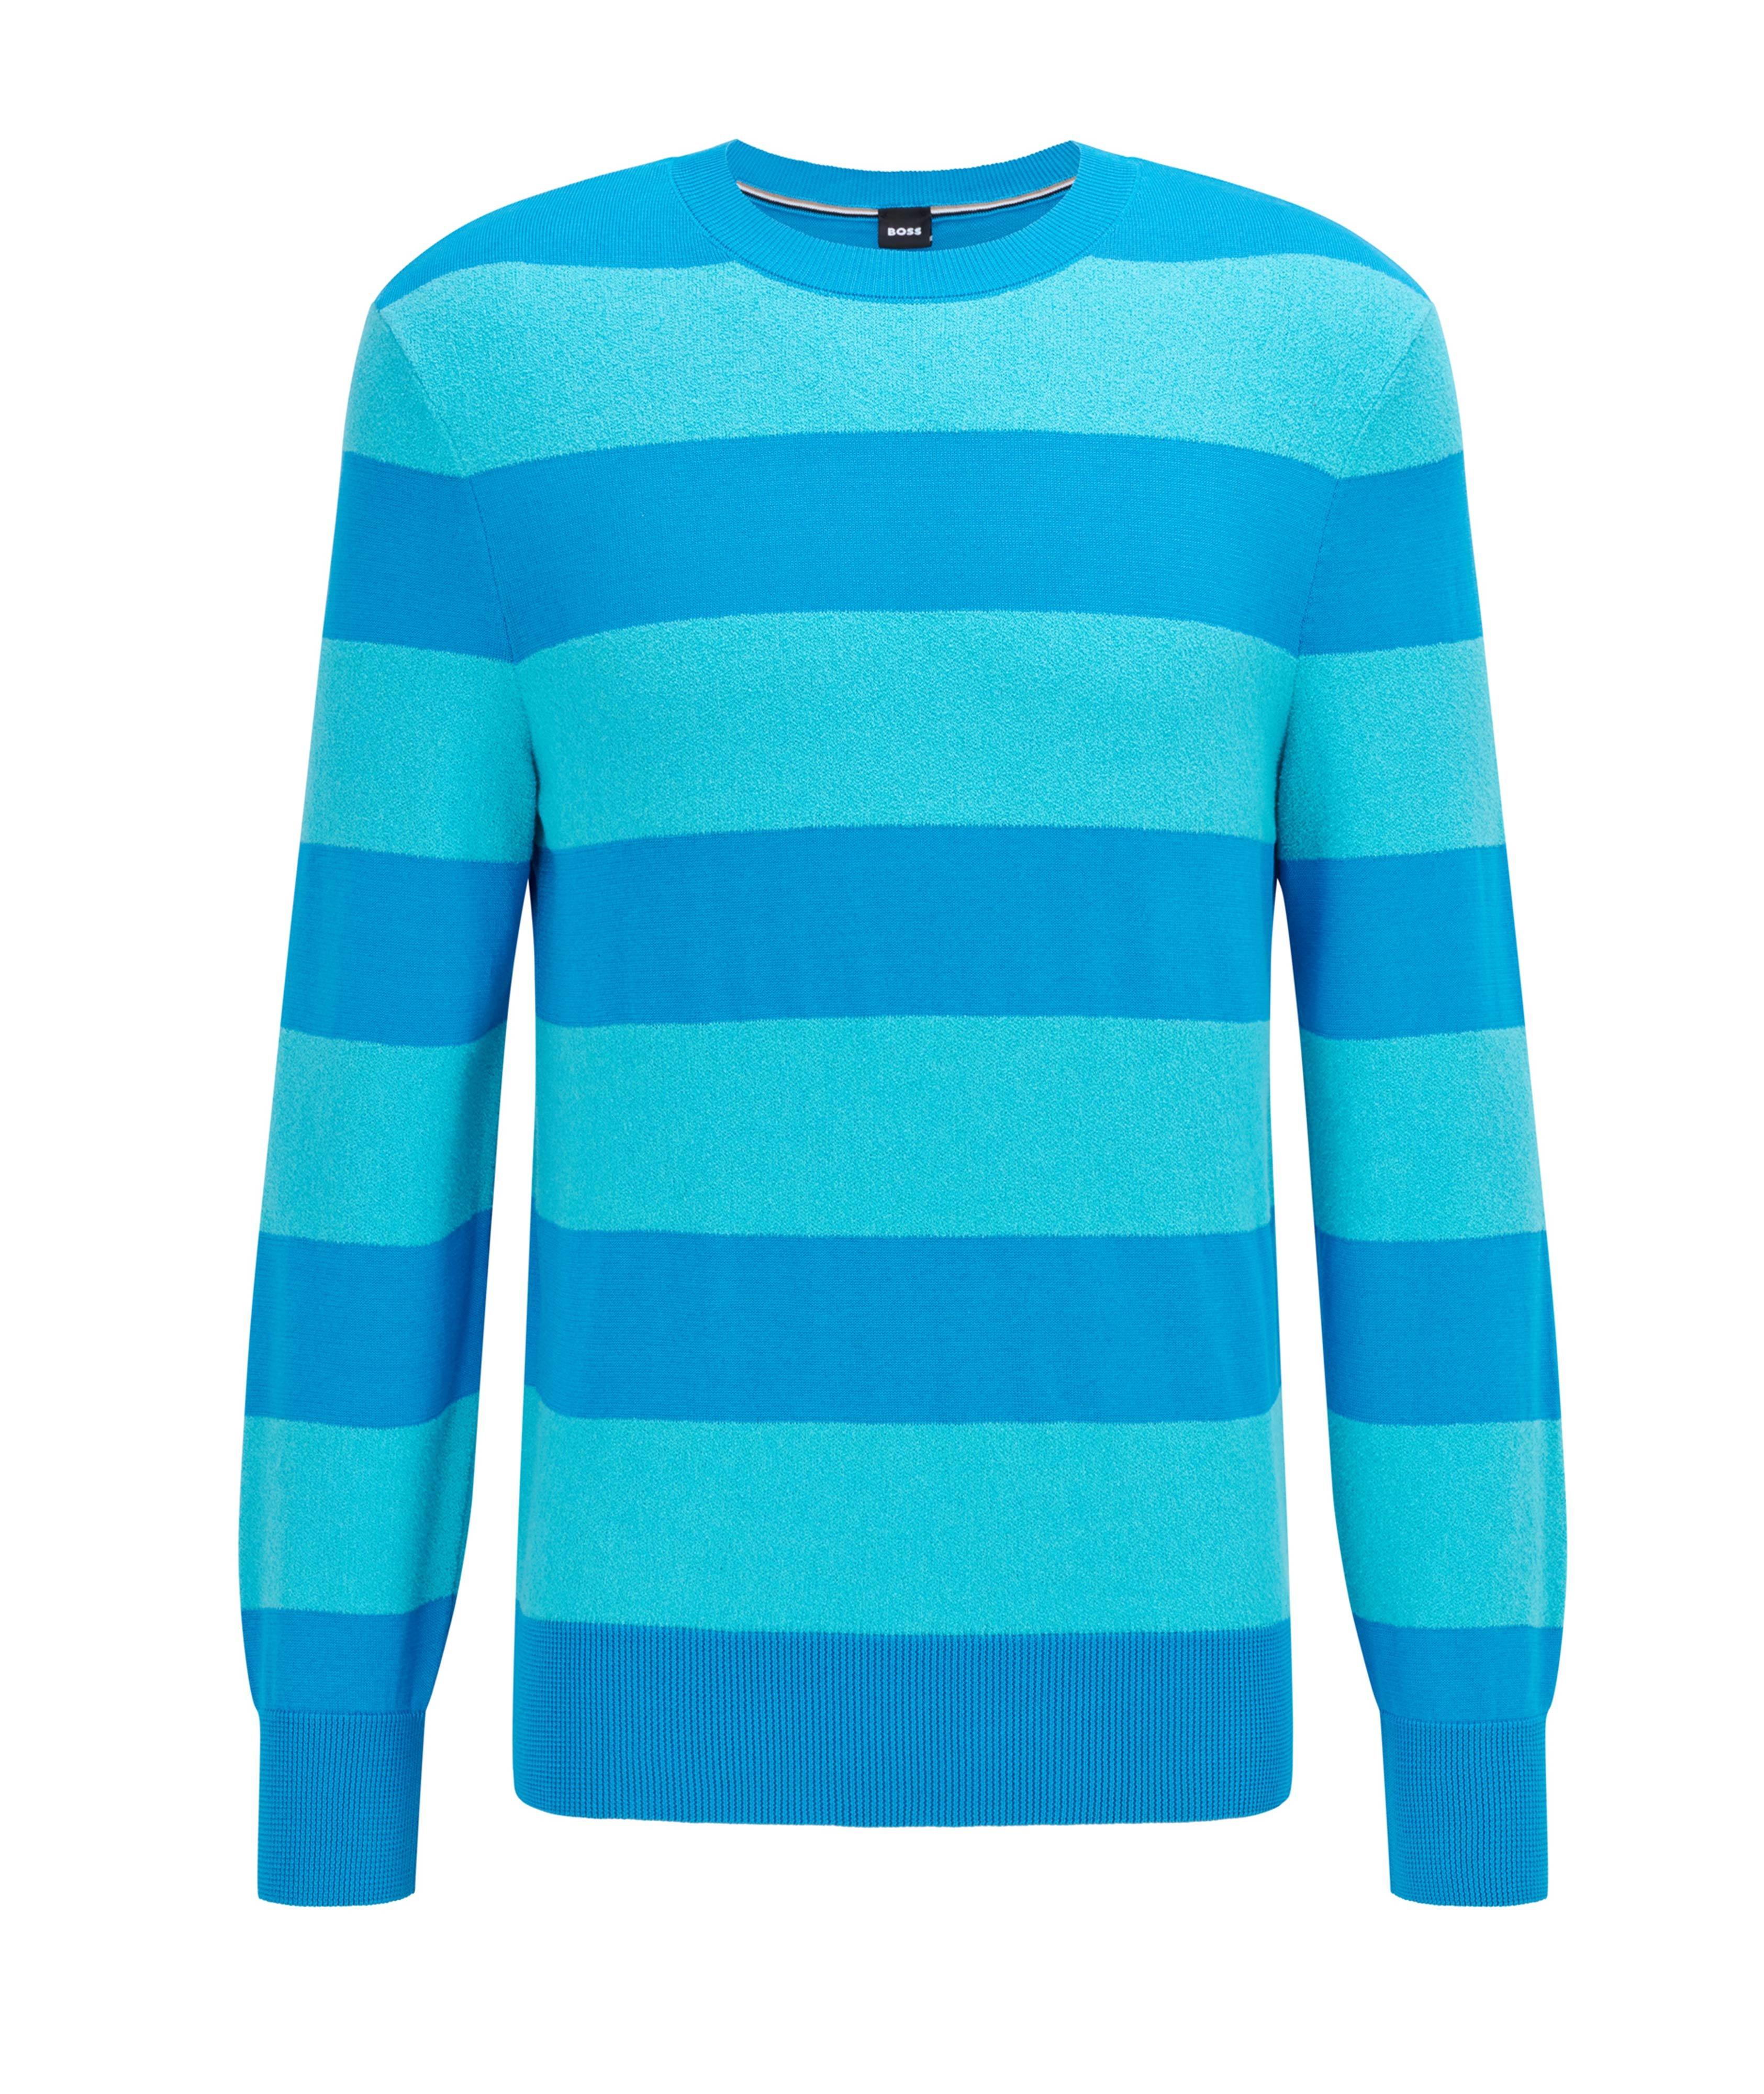 Striped Wool Sweater image 0